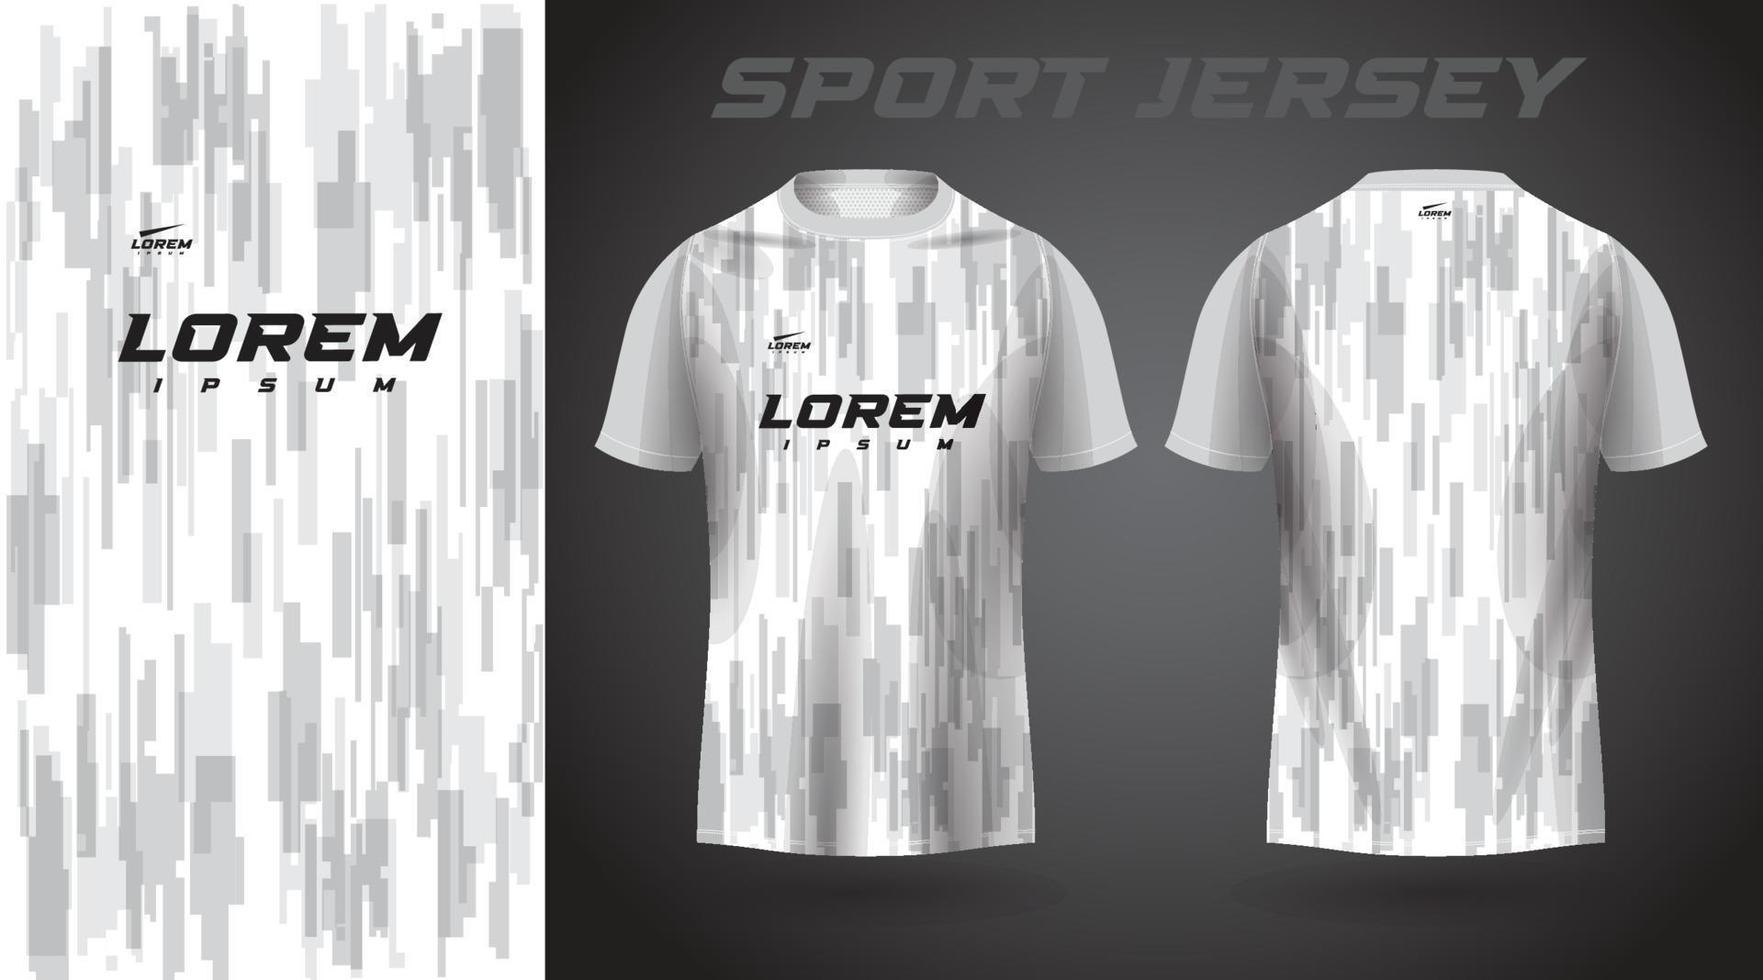 vit skjorta sport jersey design vektor